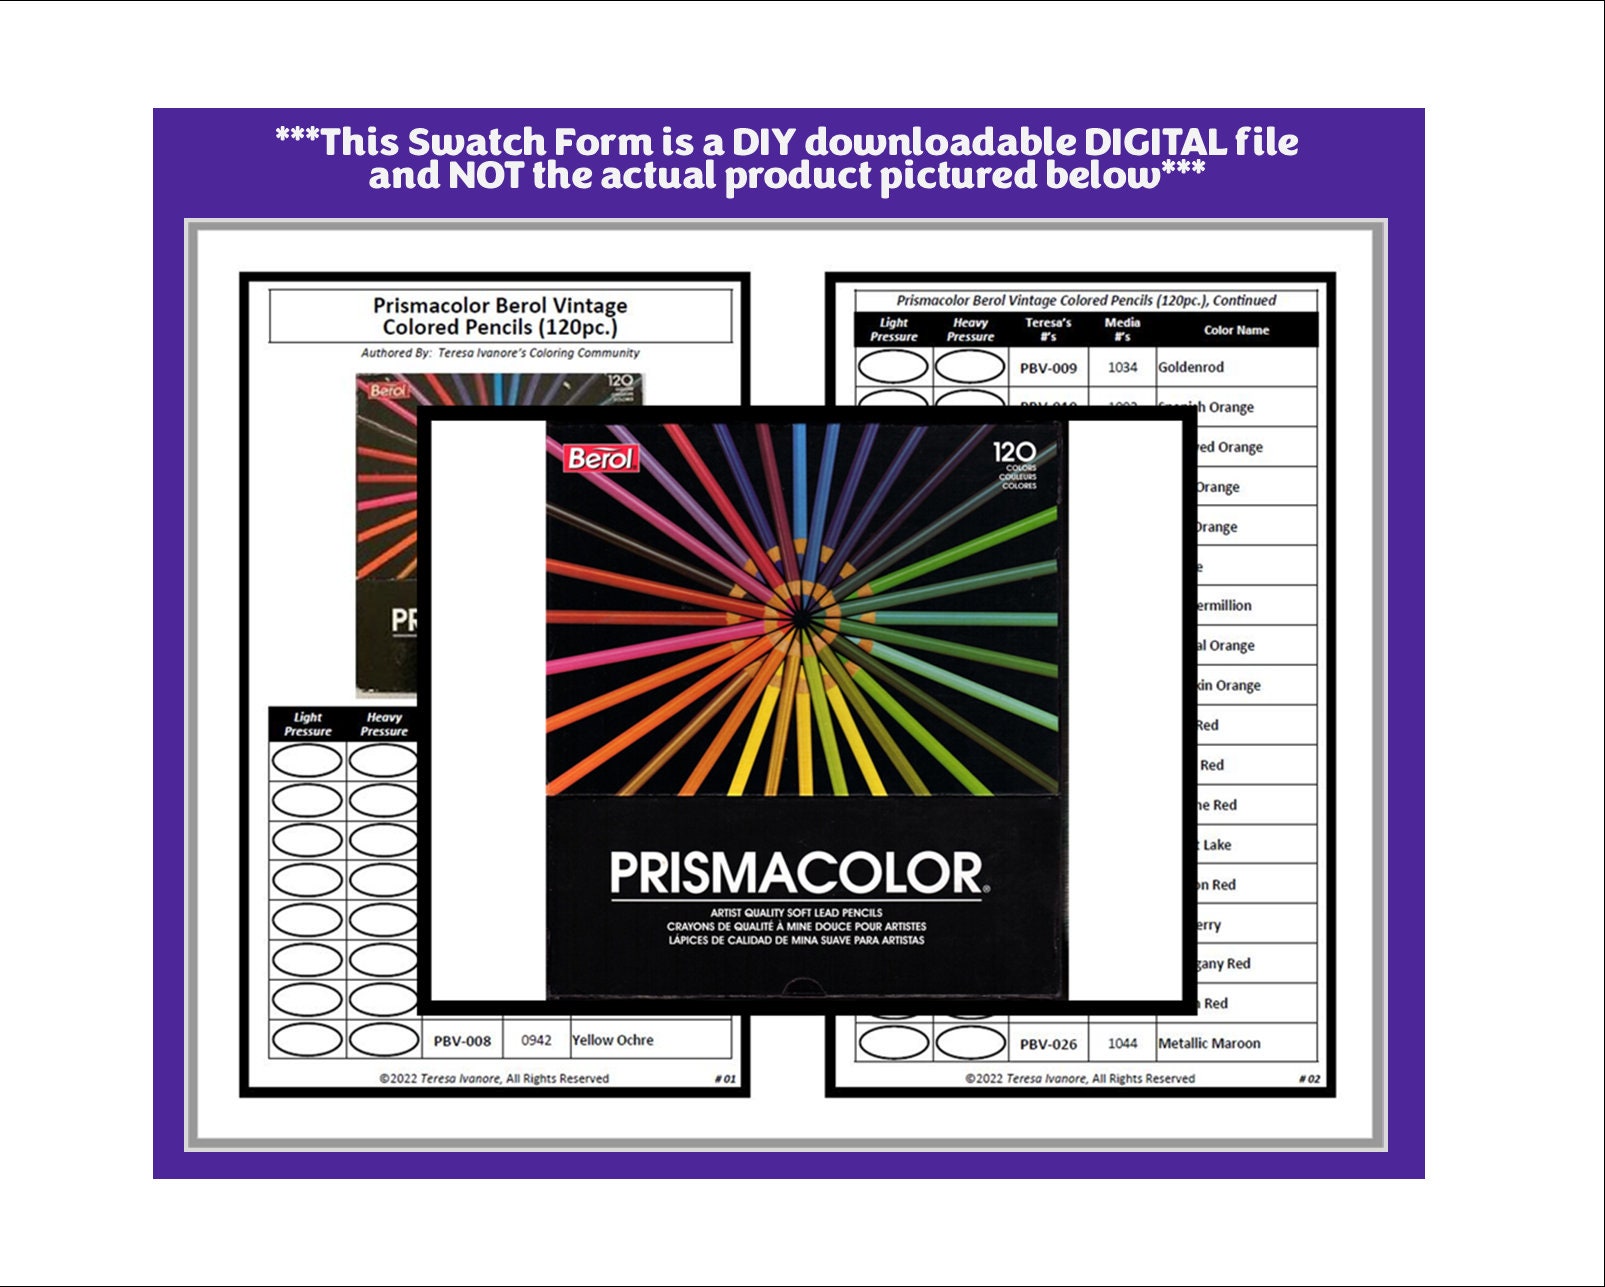 Prismacolor Premier Colored Markers, Set of 8 Fine Tip. Prismacolor Markers  Drawing, Blending, Coloring Book, Prismacolor Arts Crafts 